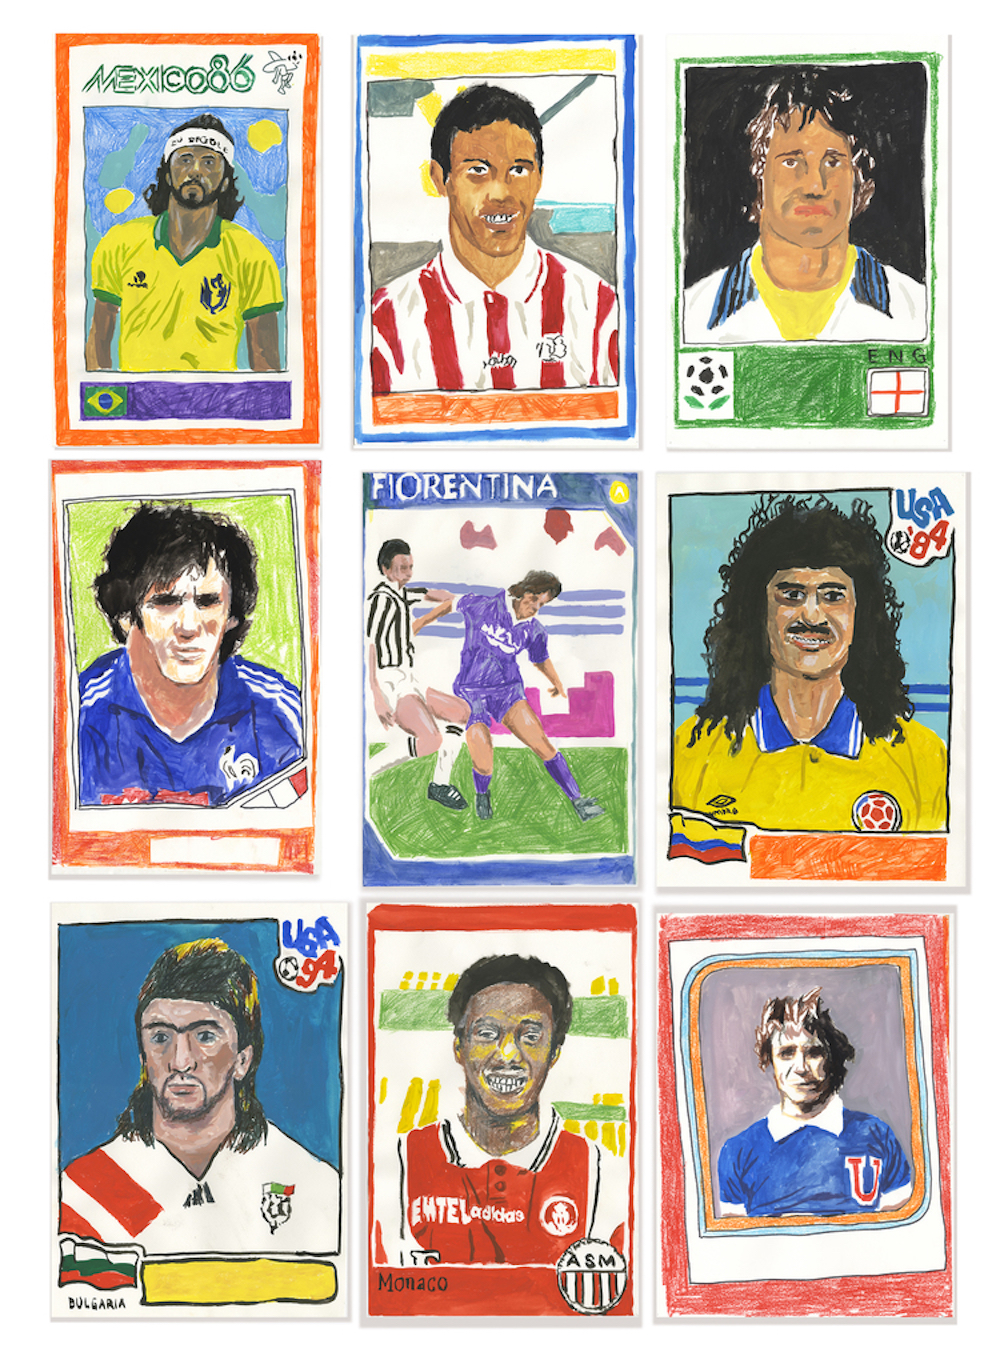 From Sports Trade Cards series including Socrates, George Best and Leonel de Jesus Alvarez